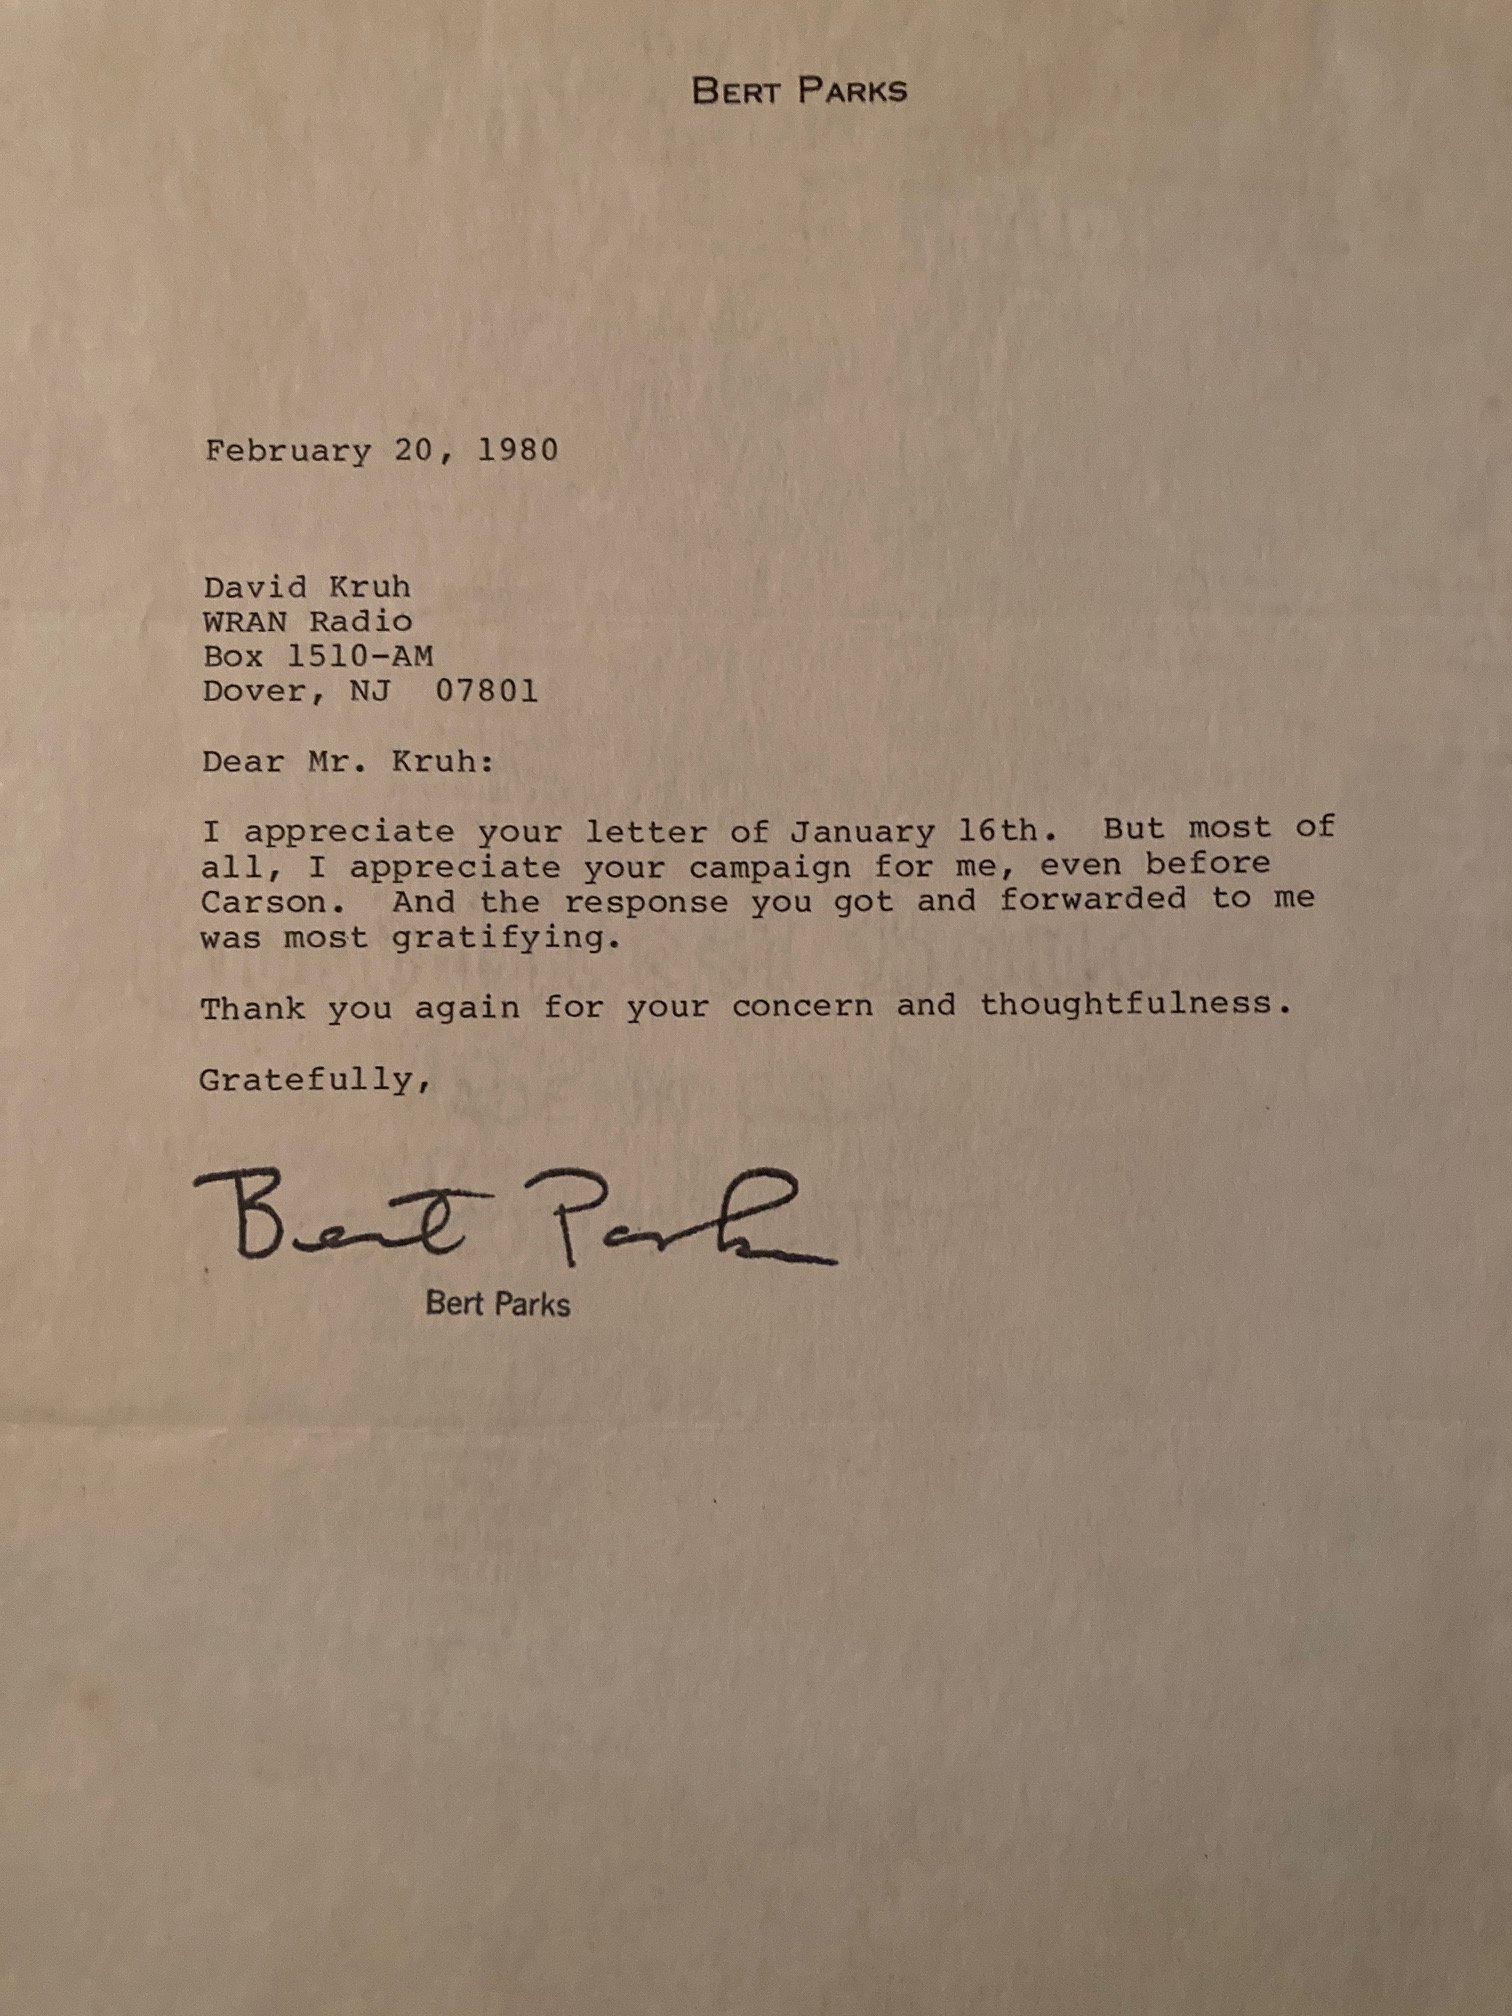 Bert Parks letter to David Kruh